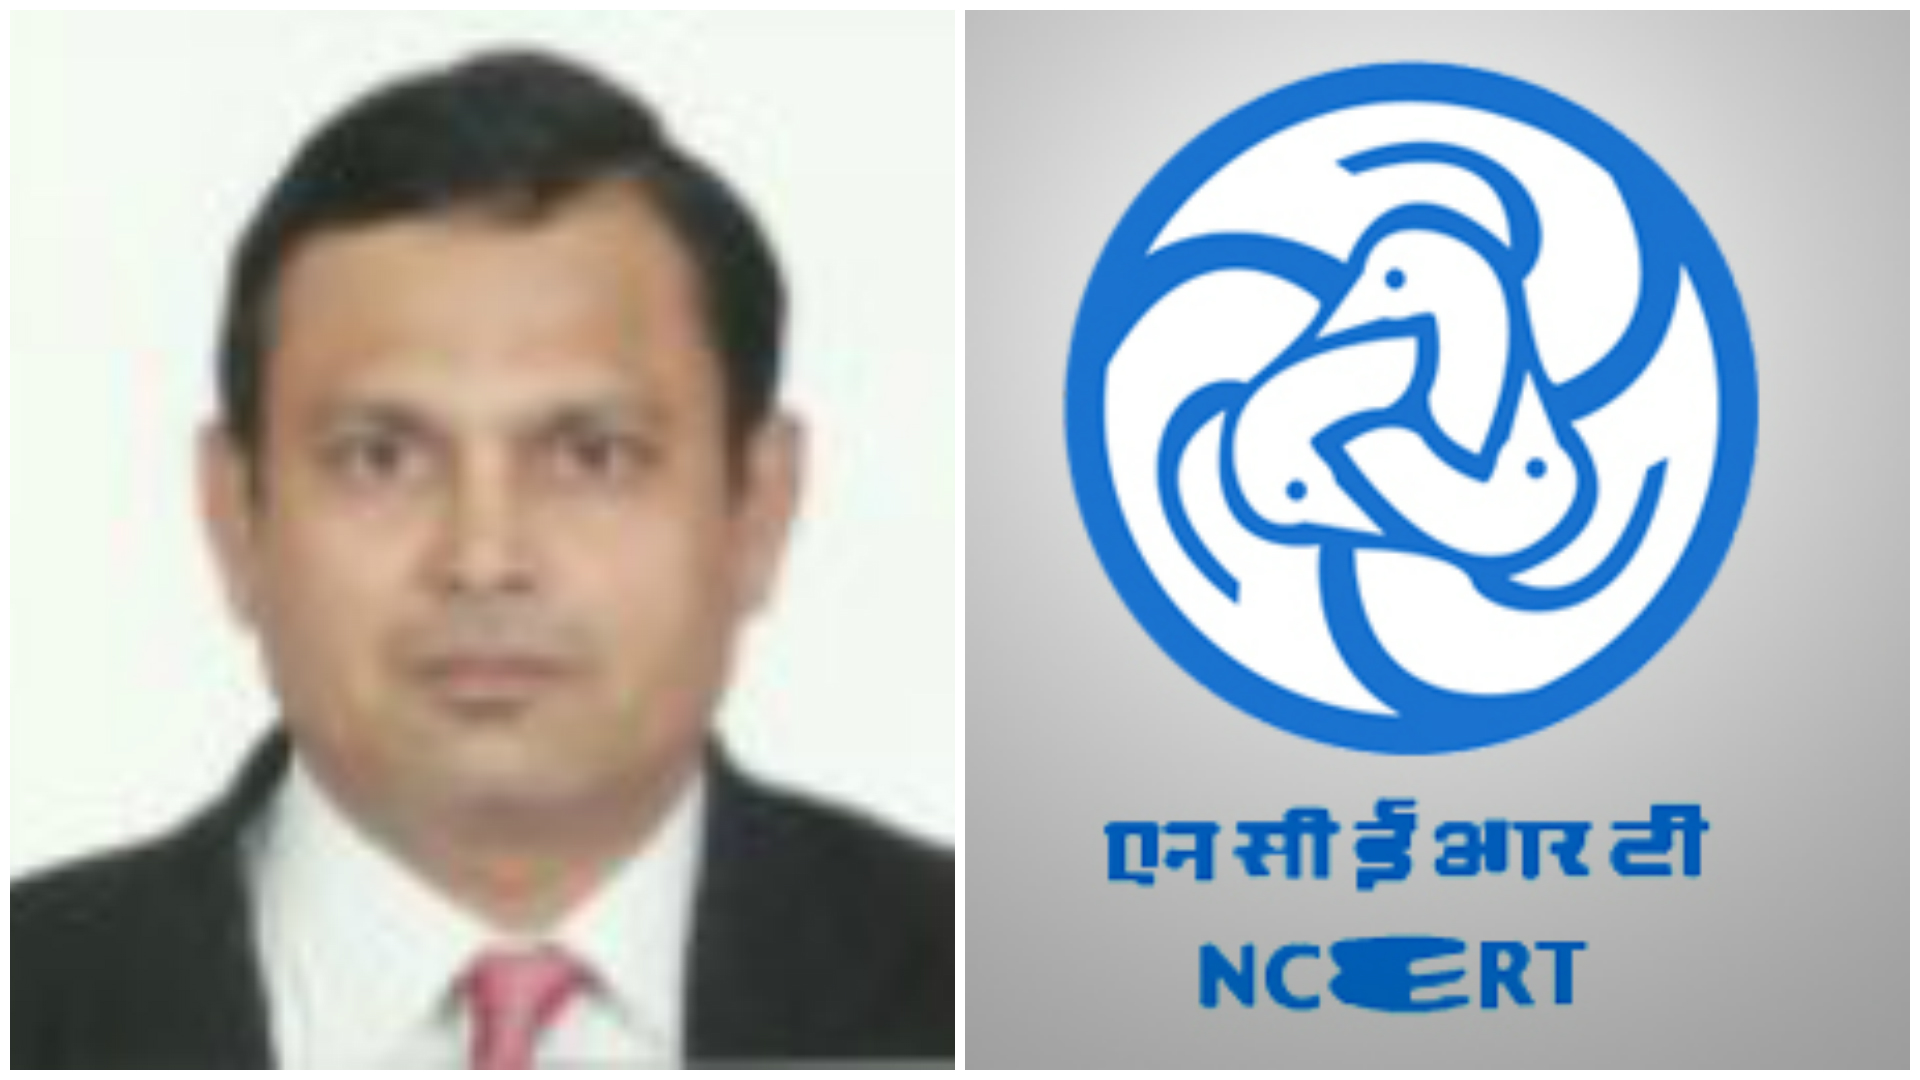 Prof. Hrushikesh Senapaty and ncrtc